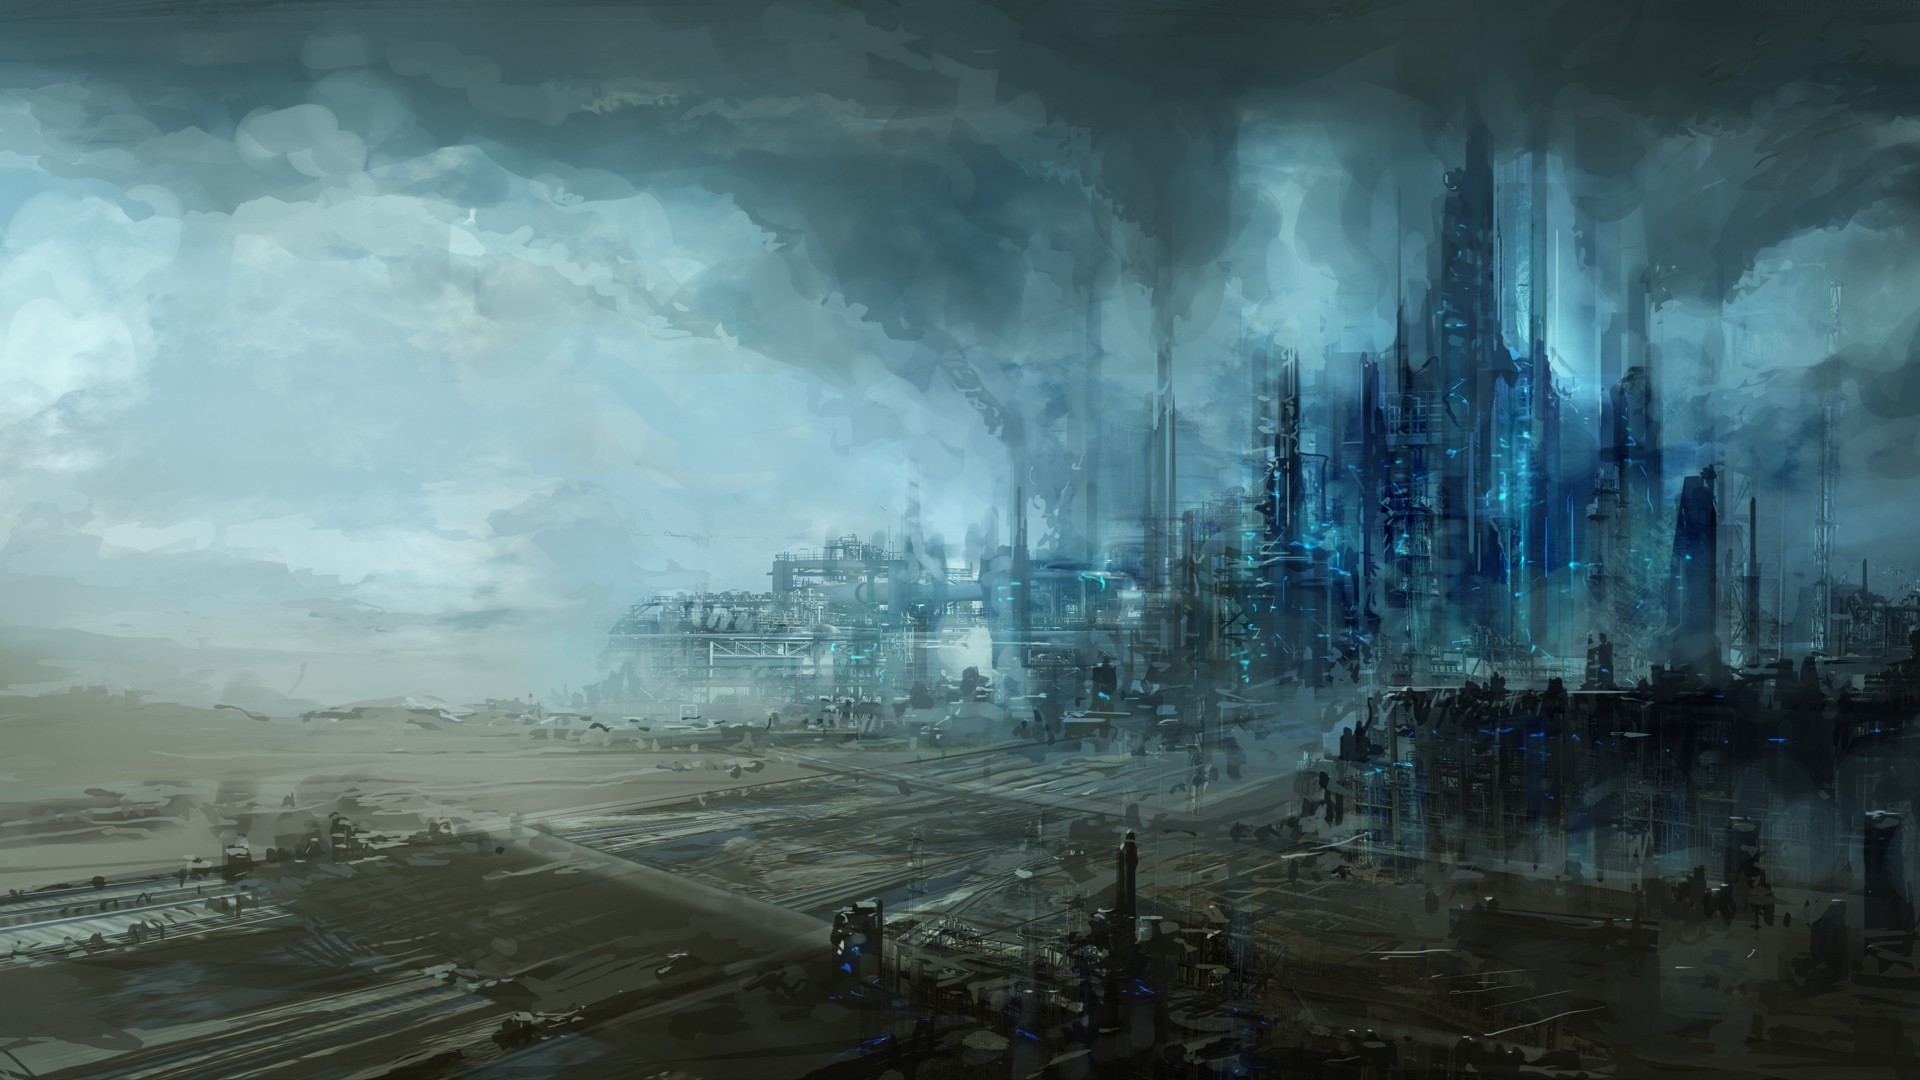 General 1920x1080 pollution industrial futuristic city artwork science fiction blue